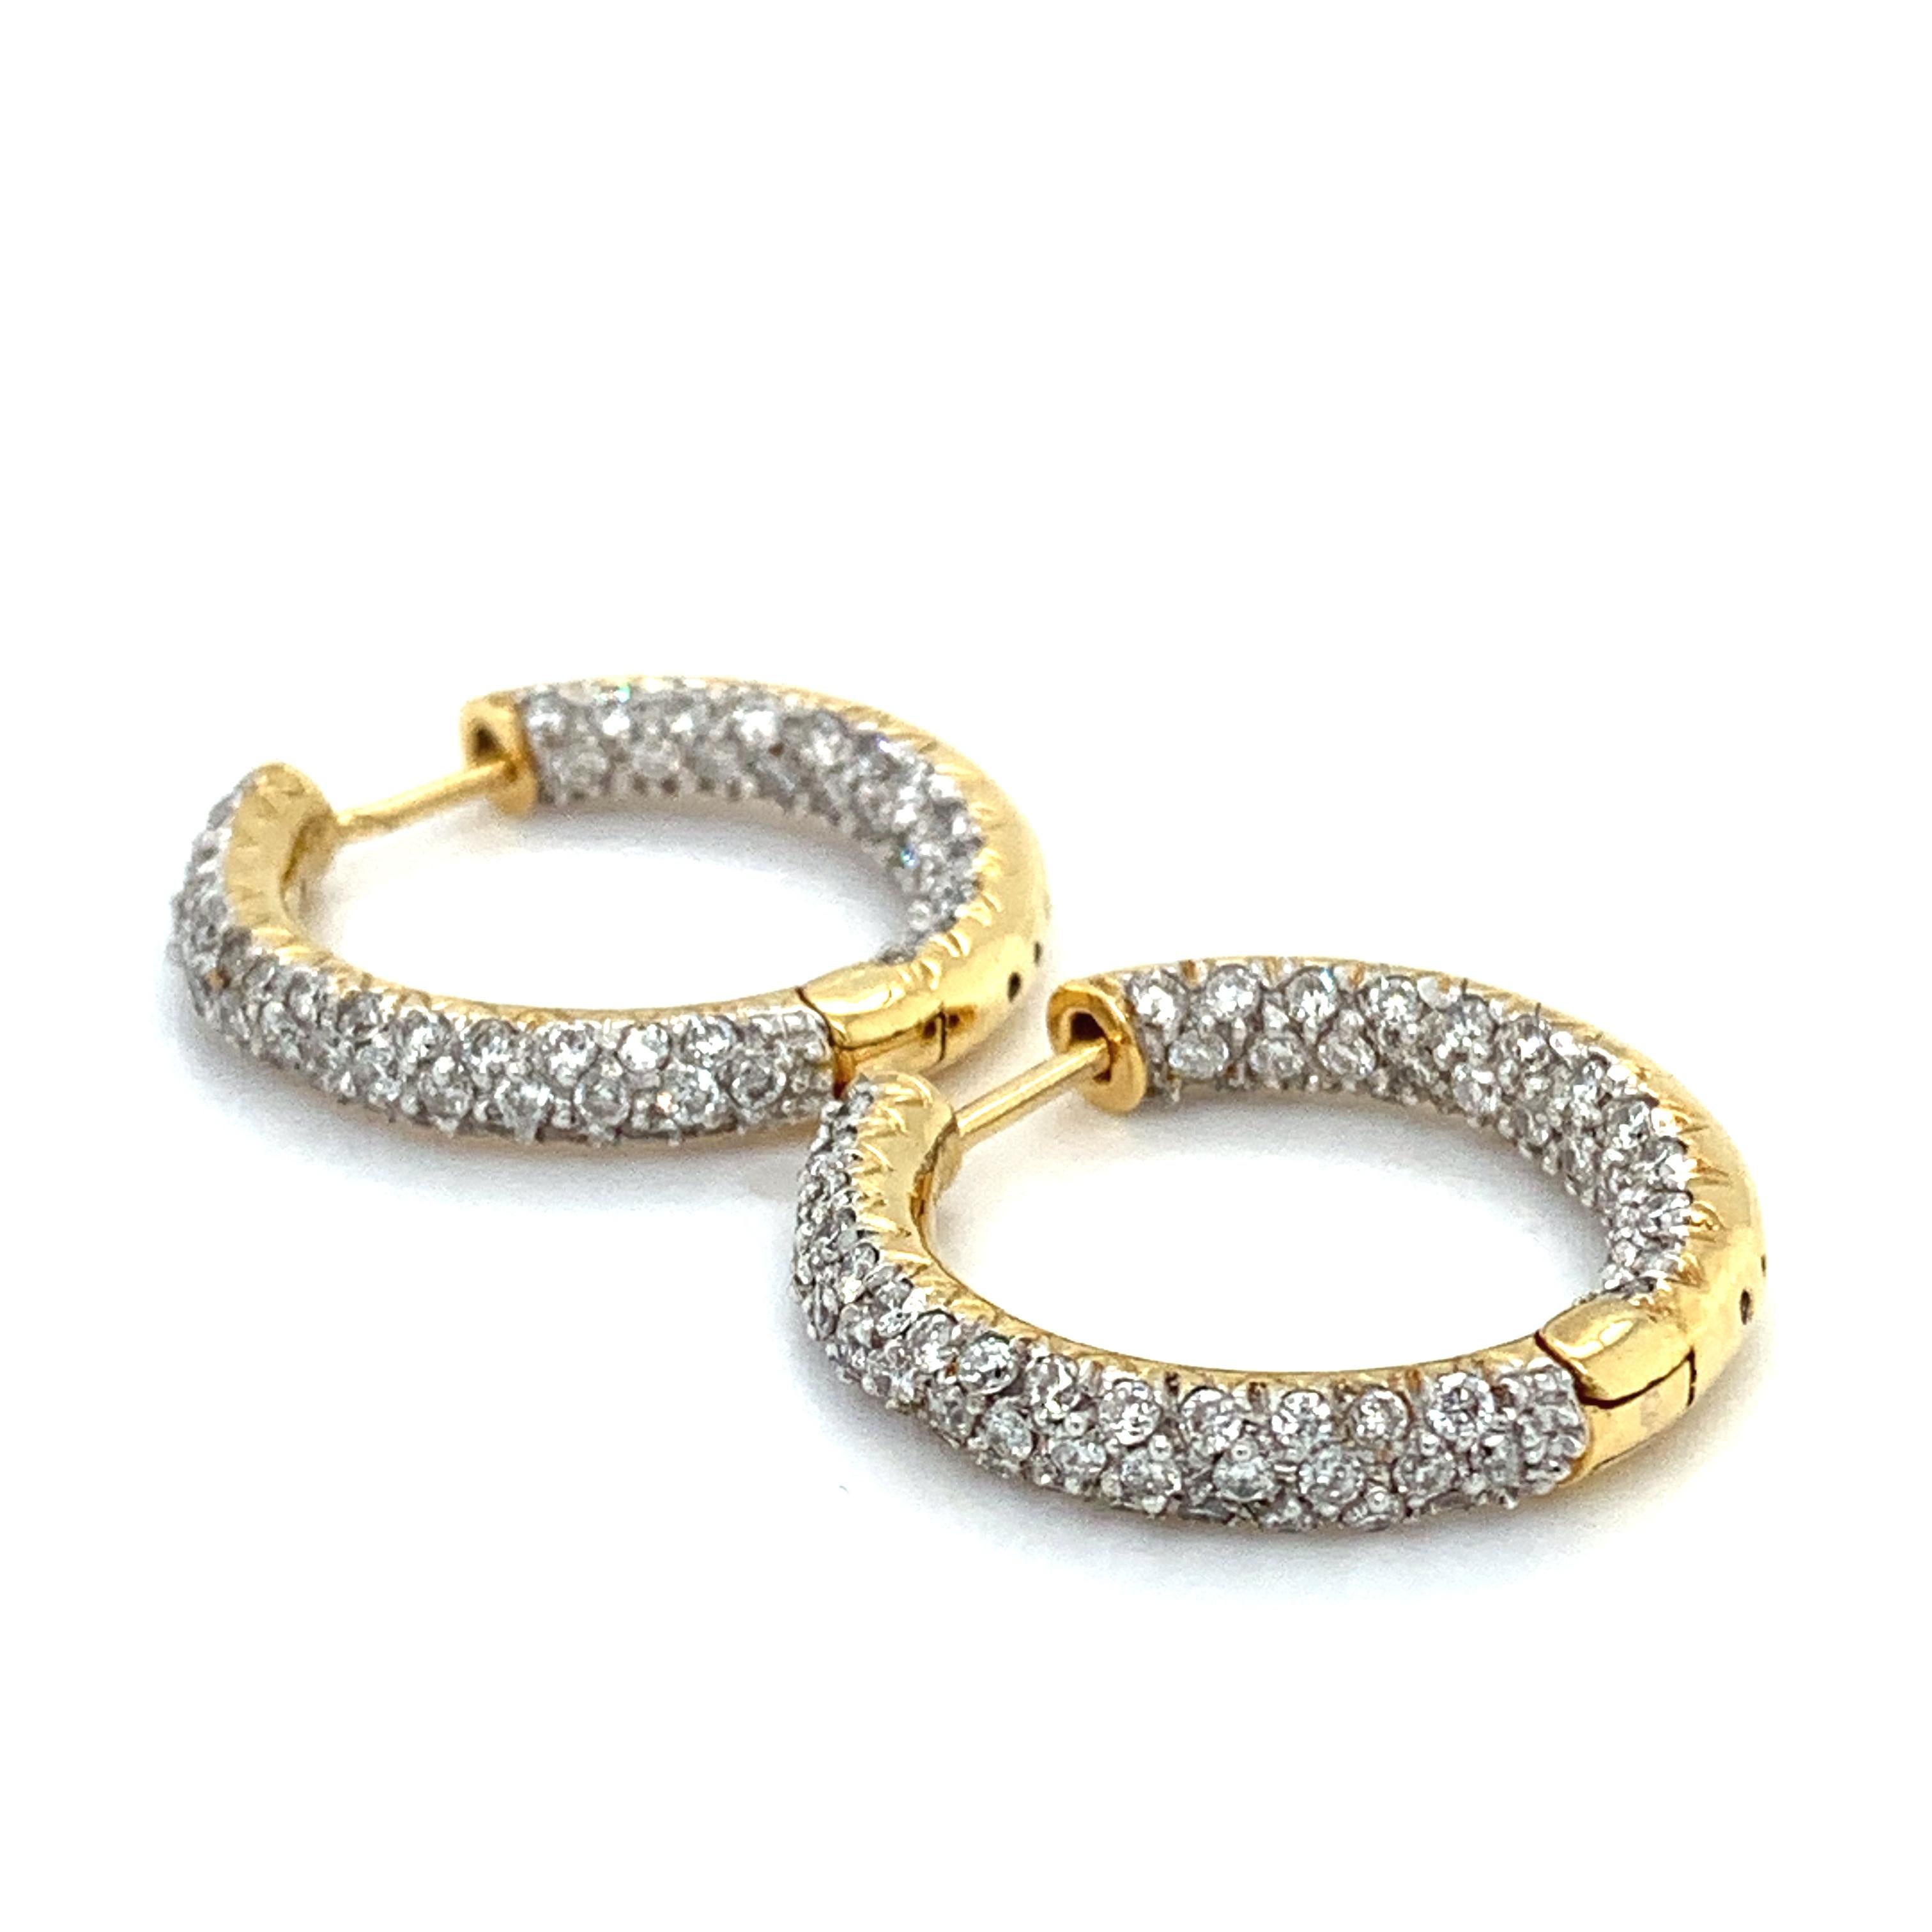 Round Cut Diamond art deco hoops huggies earrings 18k yellow gold For Sale